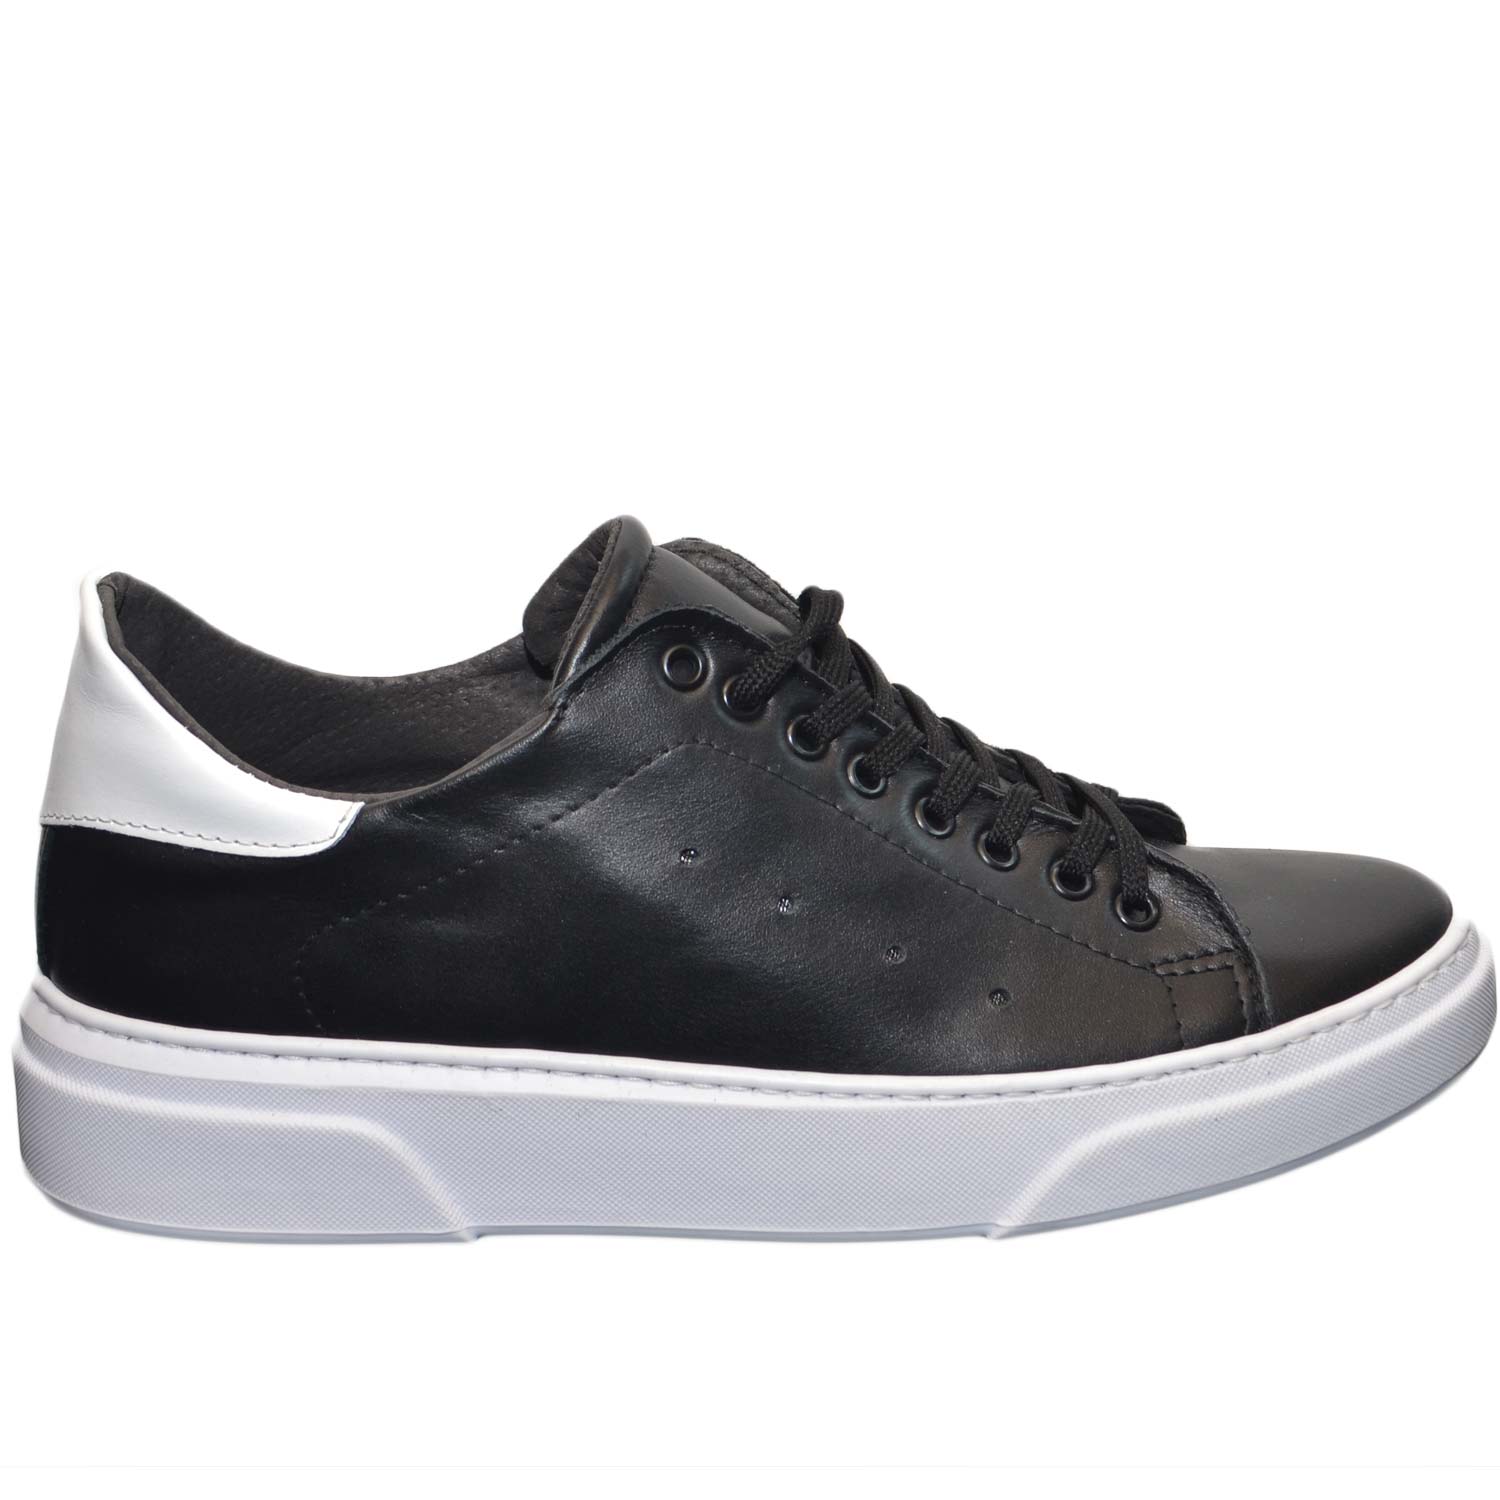 Scarpe uomo sneakers bassa invernale vera pelle bianco fondo nera linea basic made in italy handmade moda giovanile .